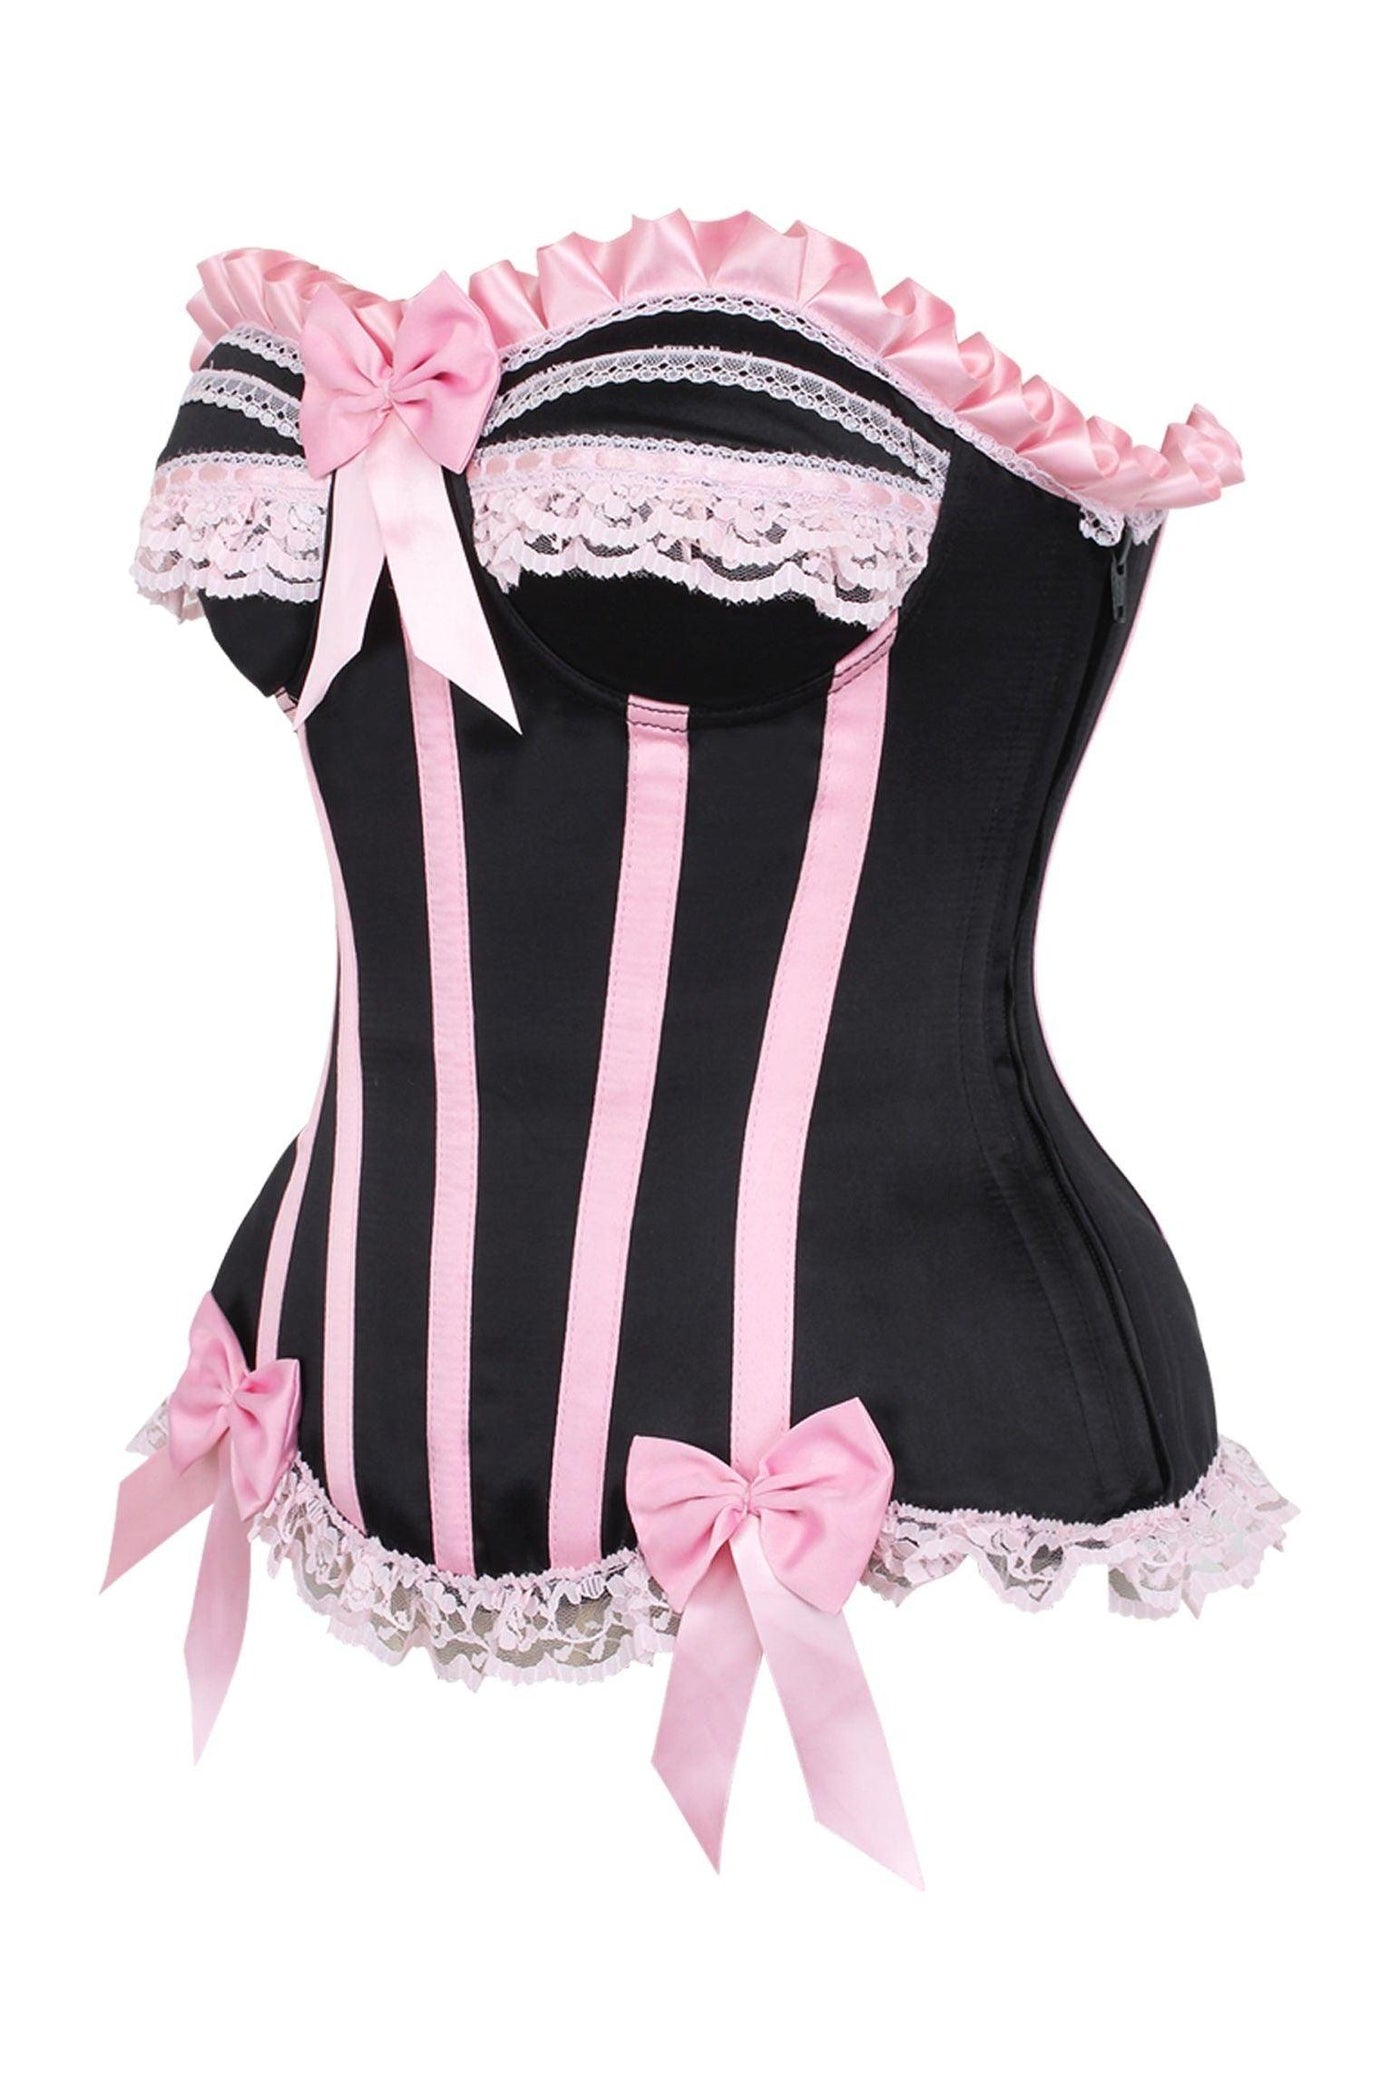 Top Drawer Black/Pink Steel Boned Burlesque Corset - AMIClubwear